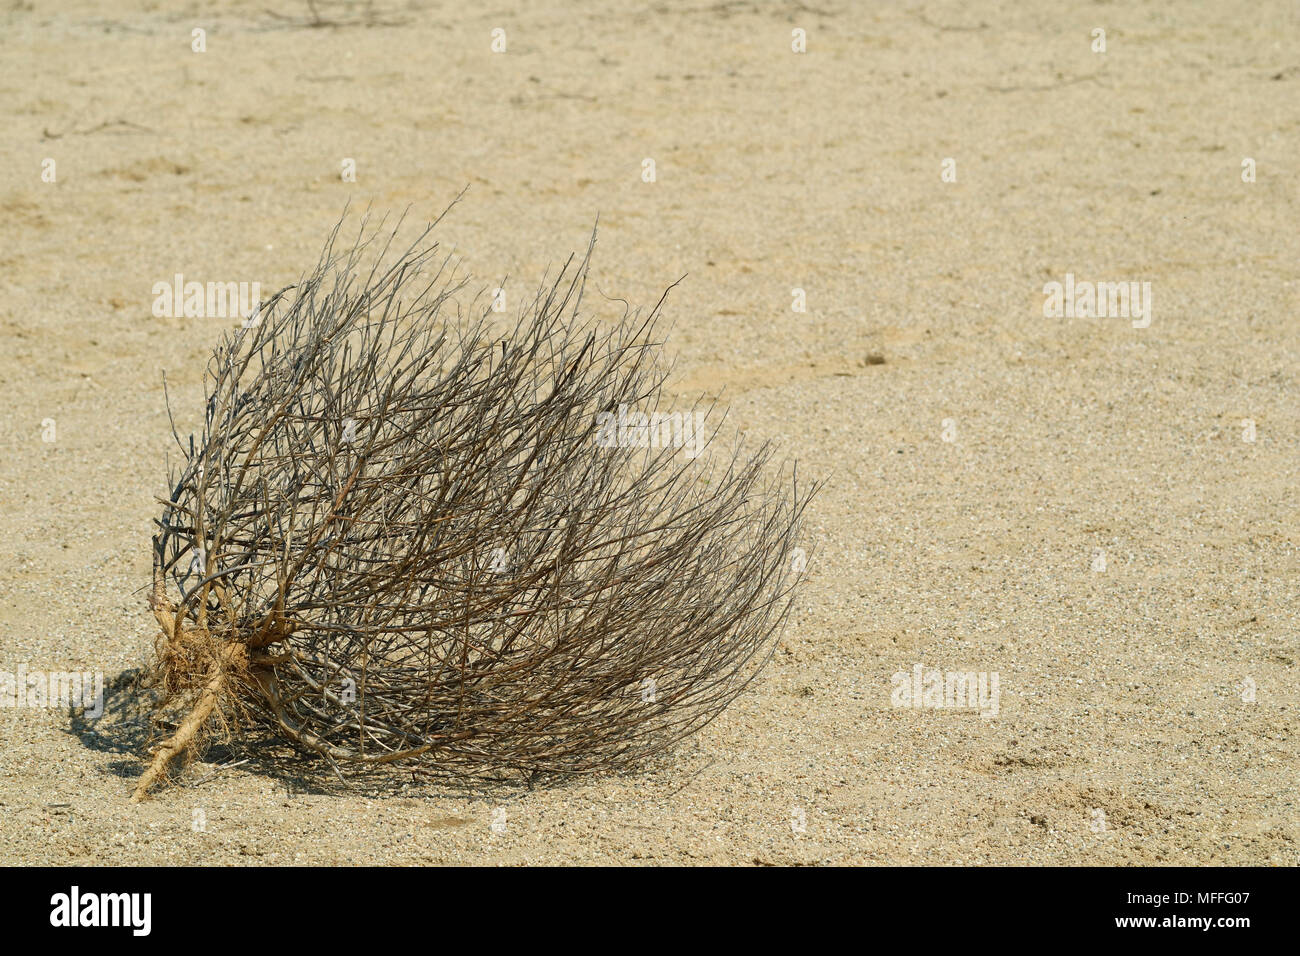 close up of a desert bush on sandy ground Stock Photo